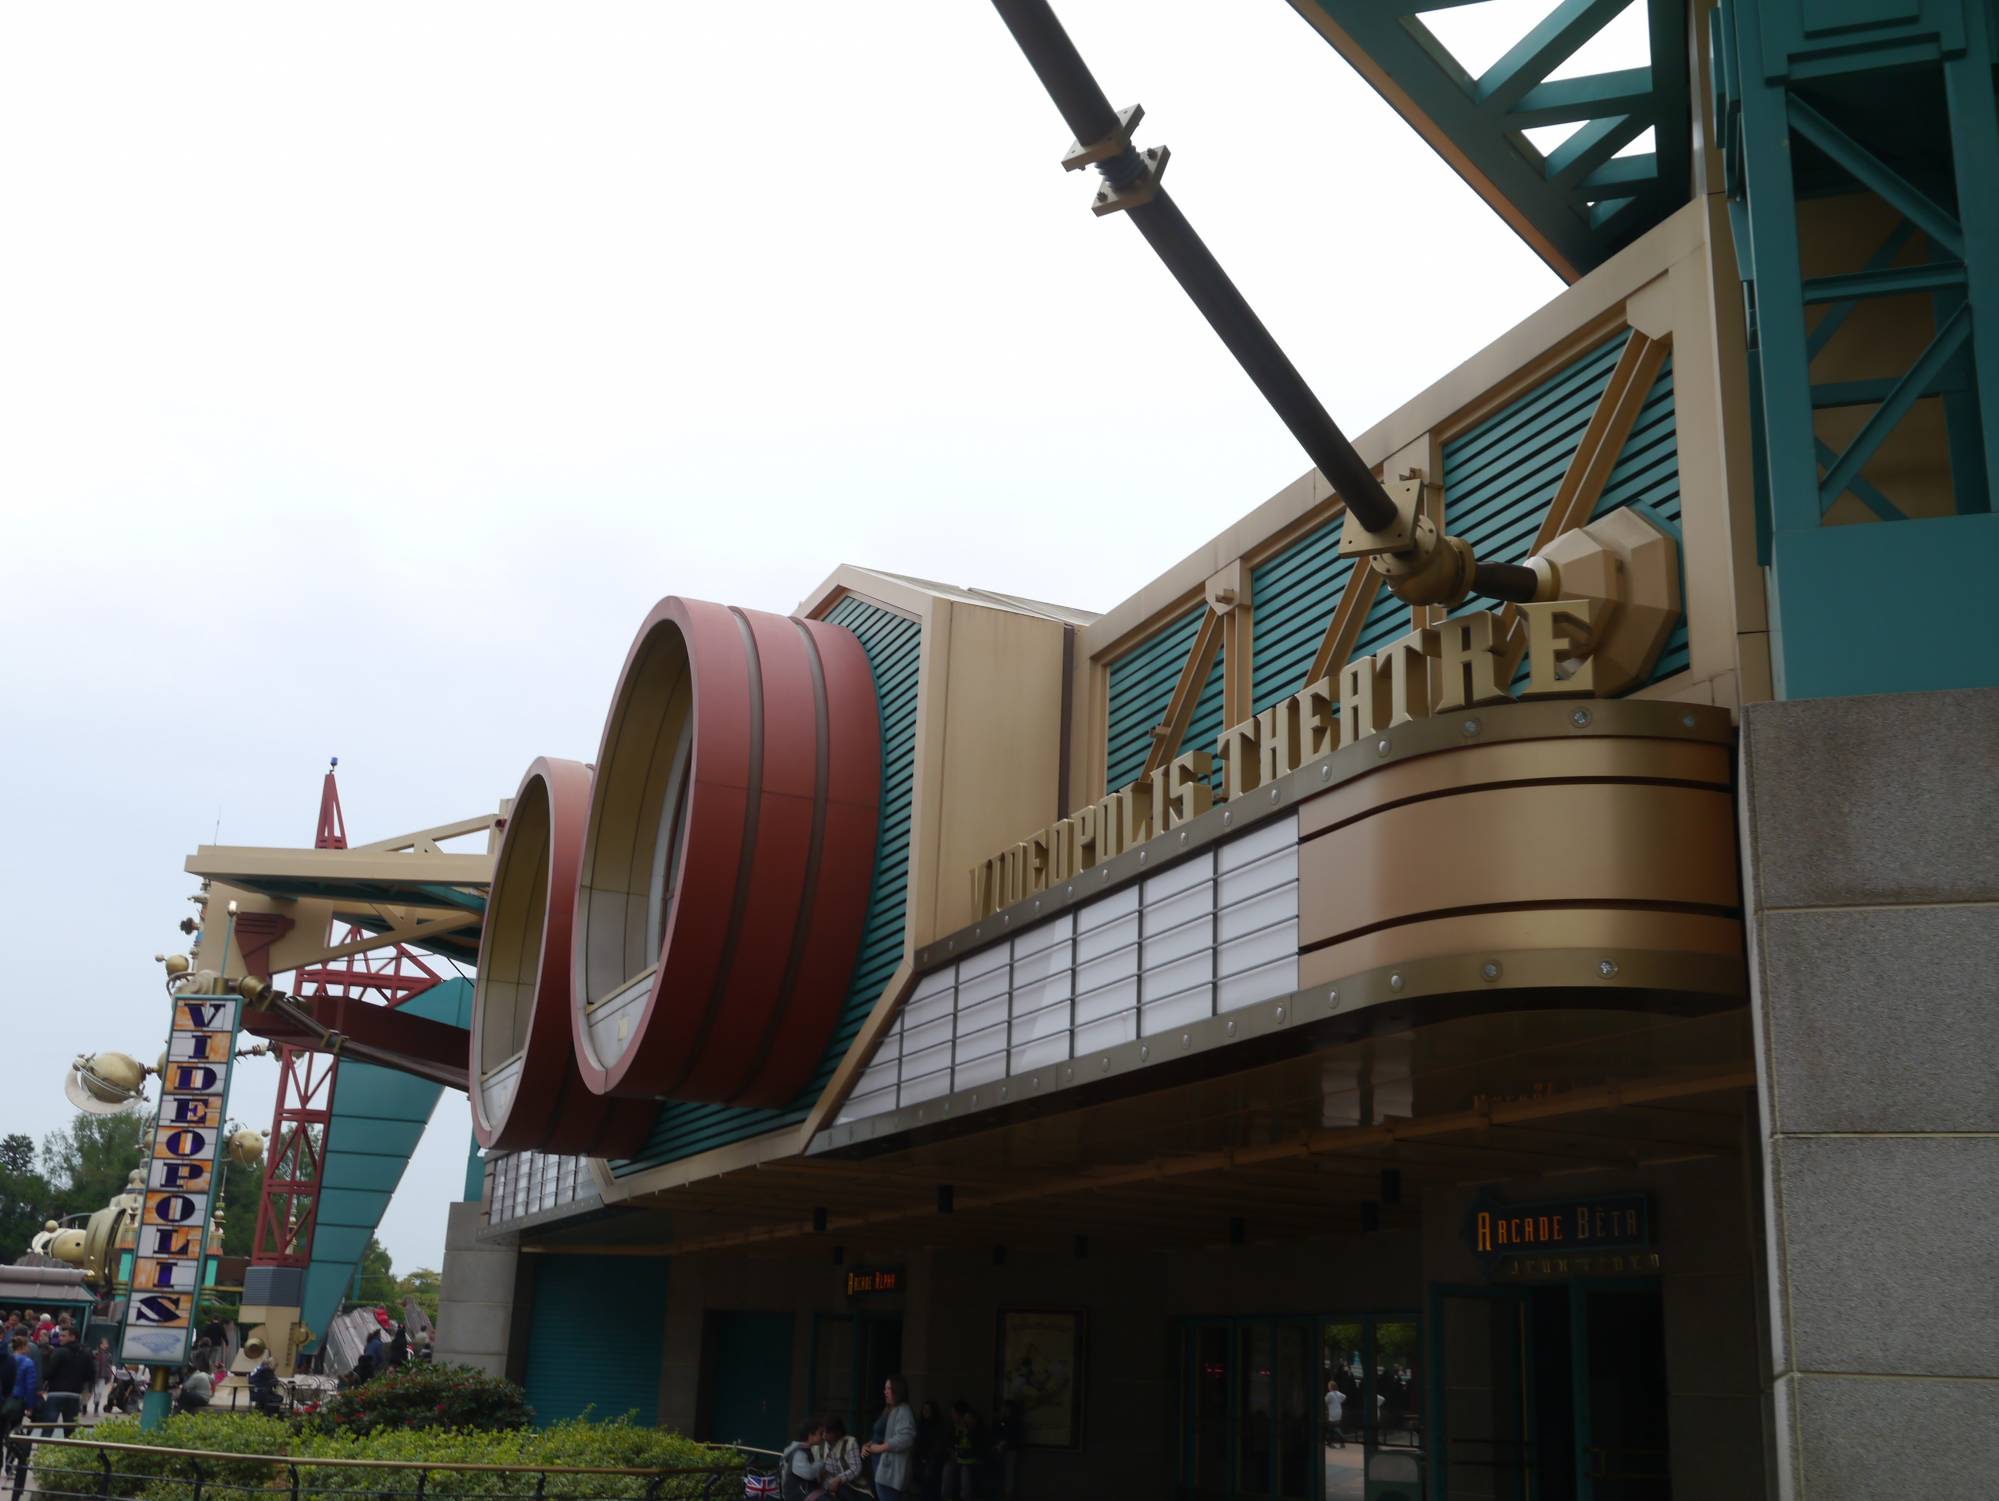 Disneyland Park - Videopolis Theatre